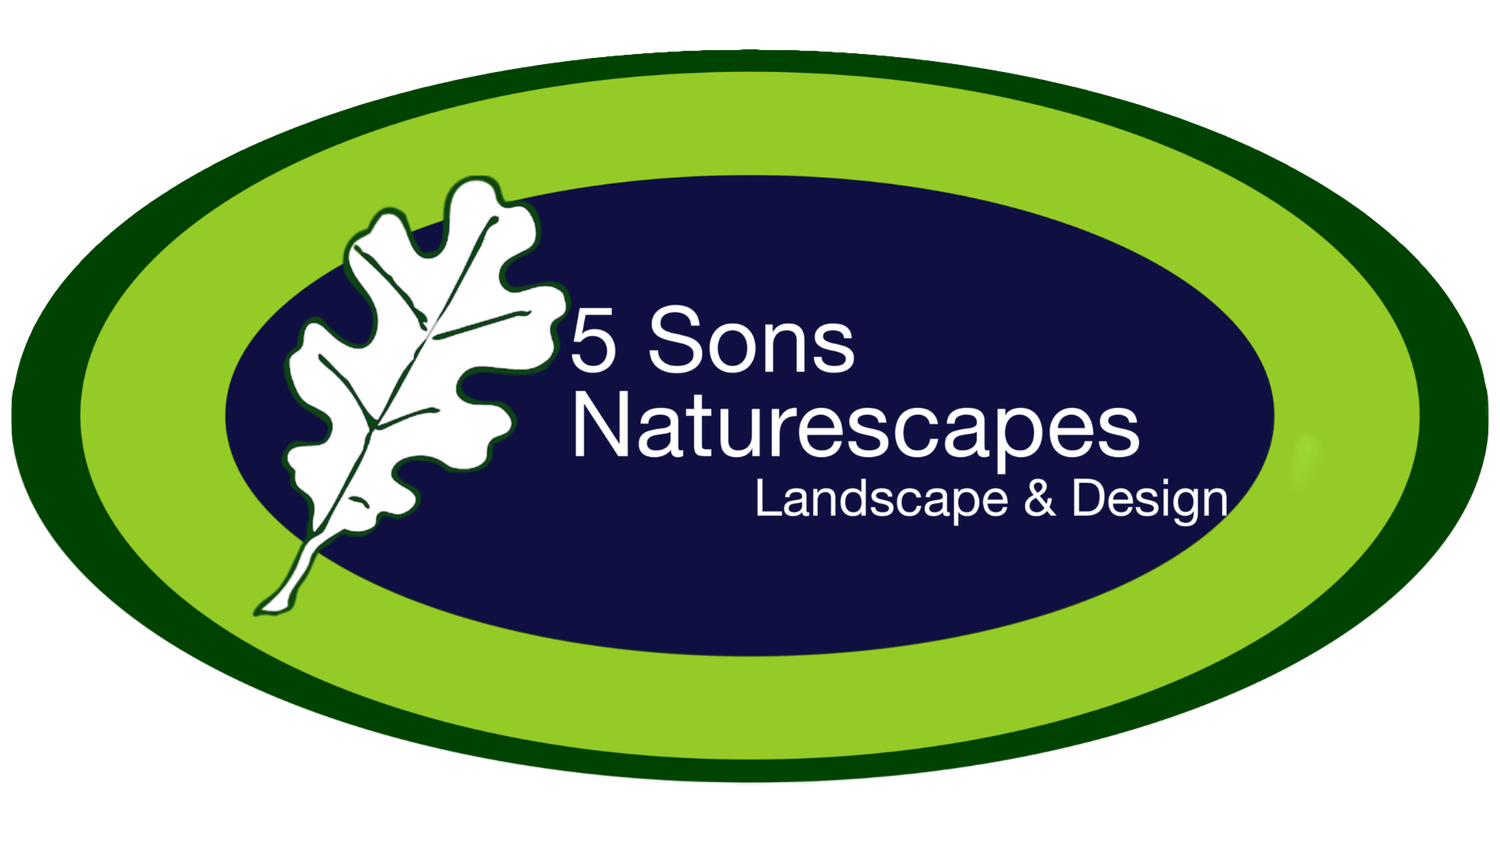 5 Sons Naturescapes